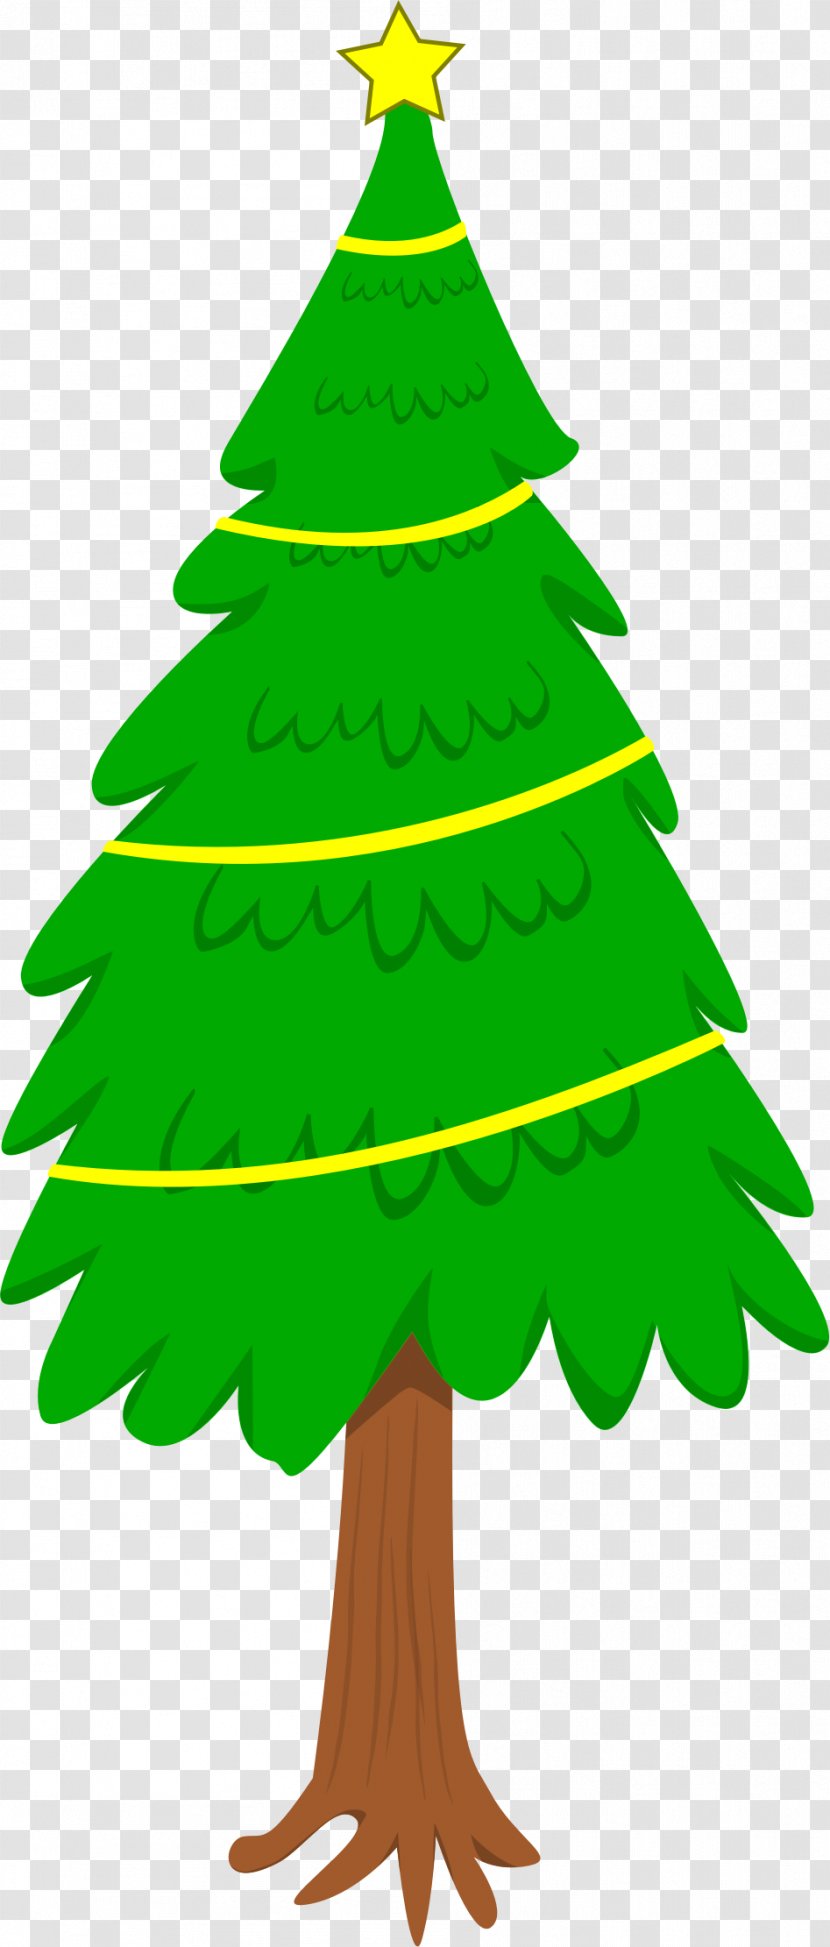 Christmas Tree Ornament Clip Art - Fir-tree Transparent PNG